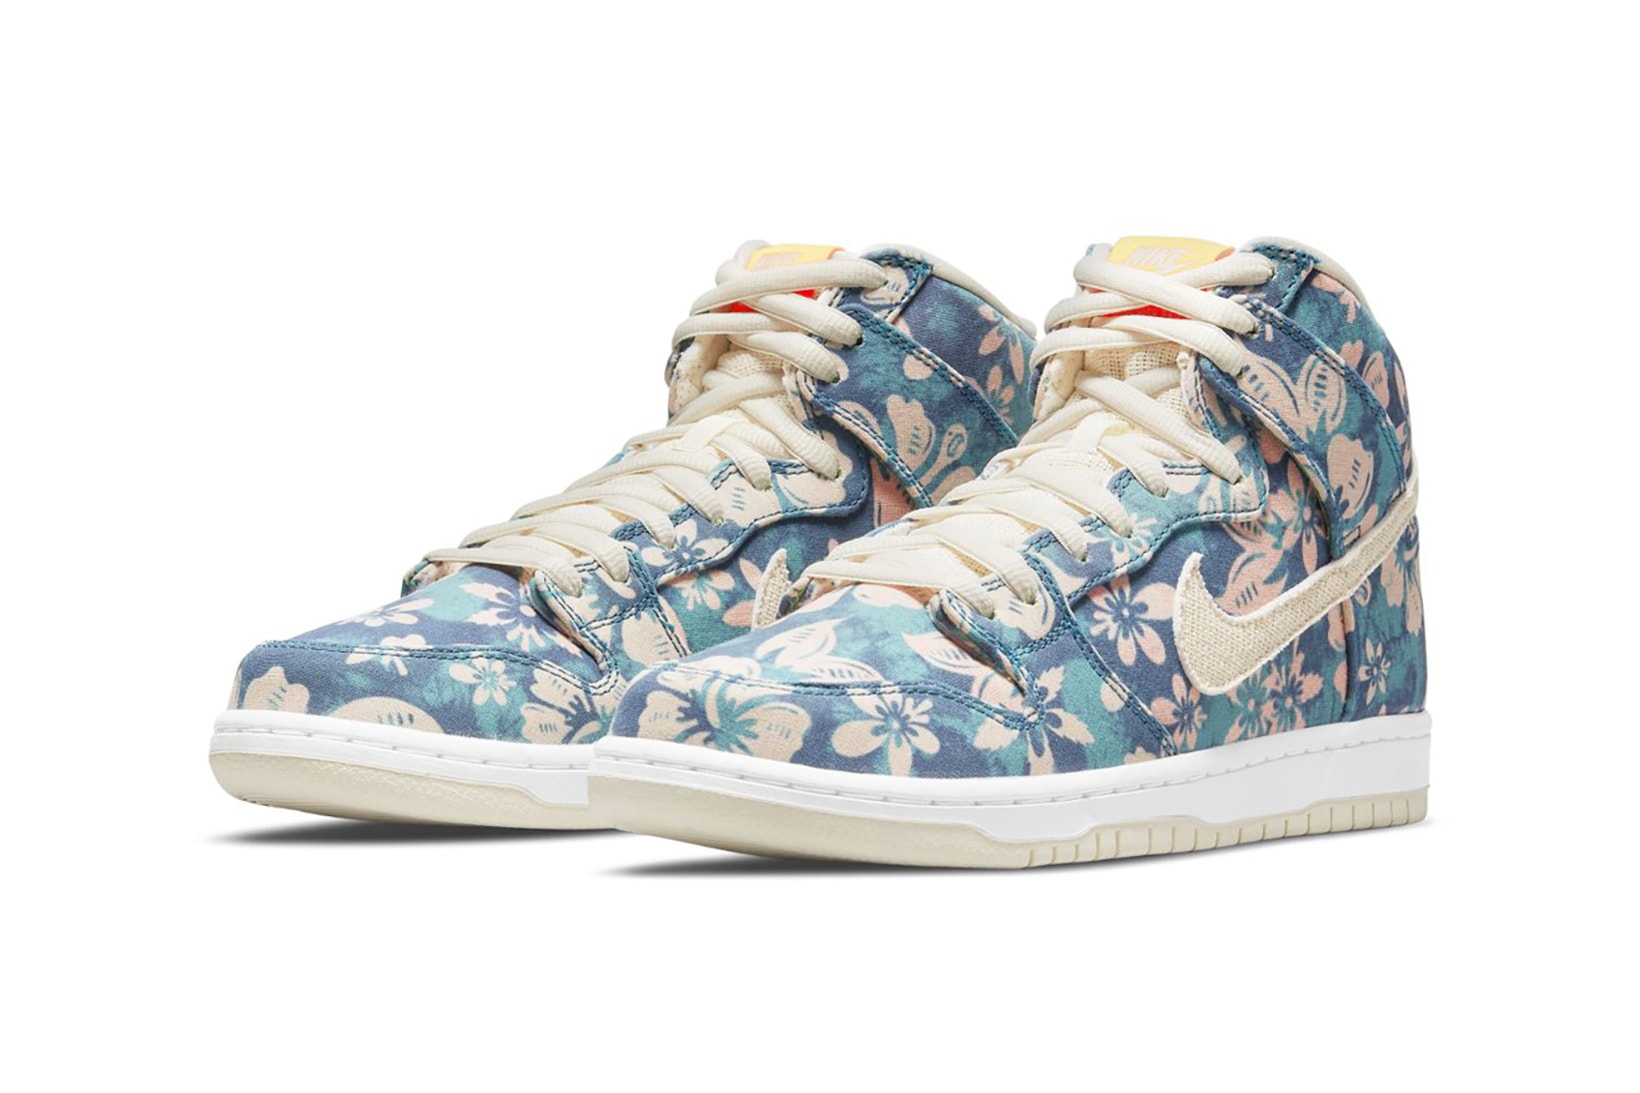 nike sb dunk high pro sneakers hawaii floral print blue beige pink white footwear kicks shoes sneakerhead lateral